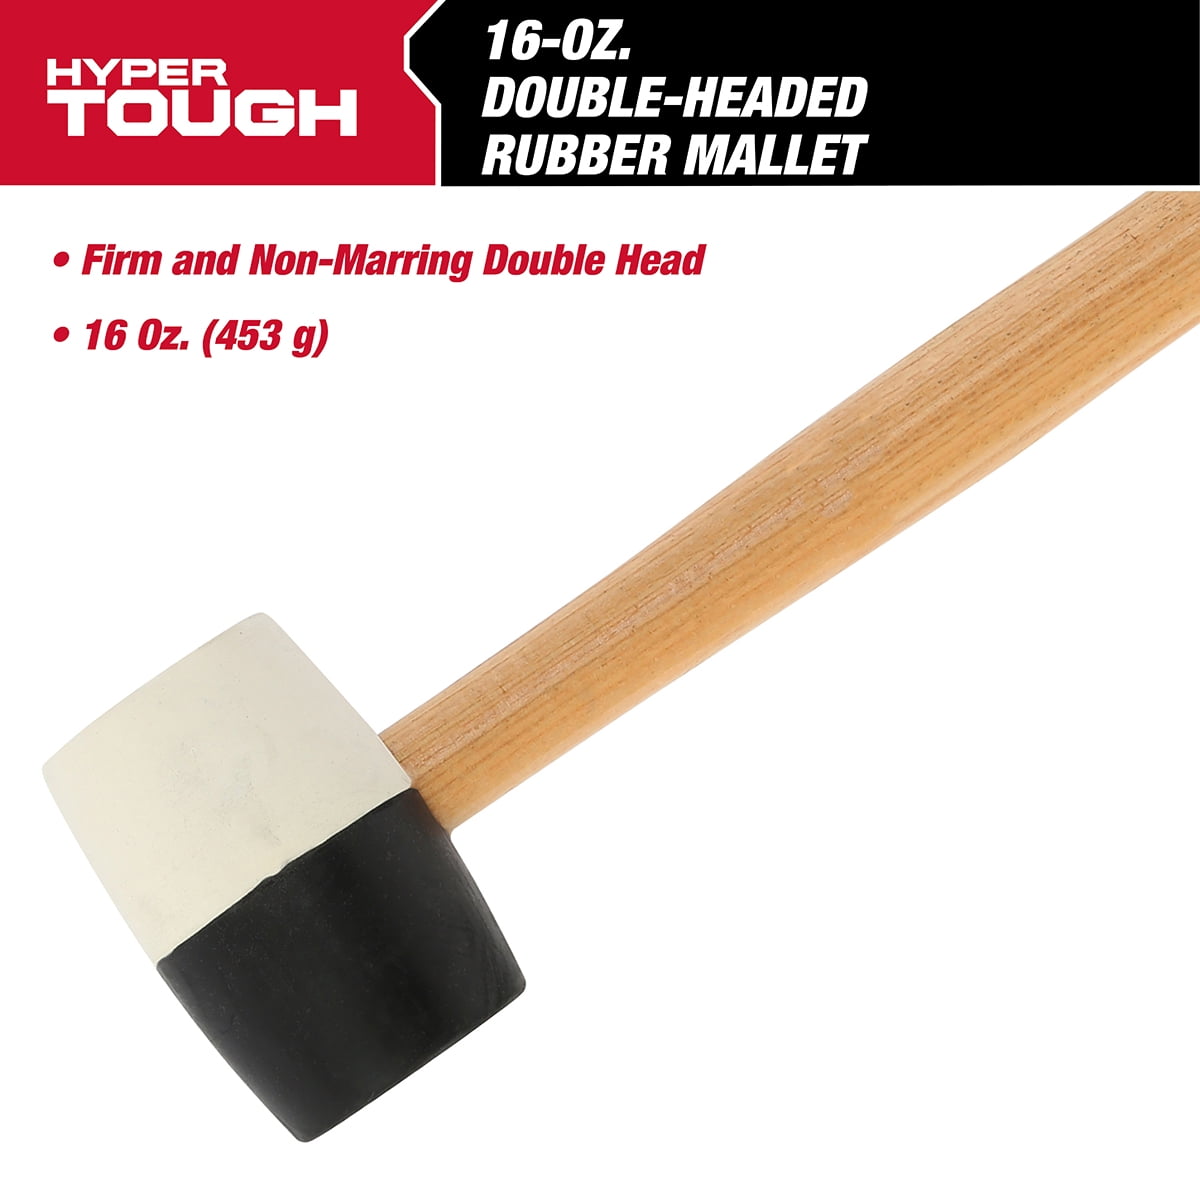 Hyper Tough Double Headed Rubber Mallet, Non-Marring Hammer